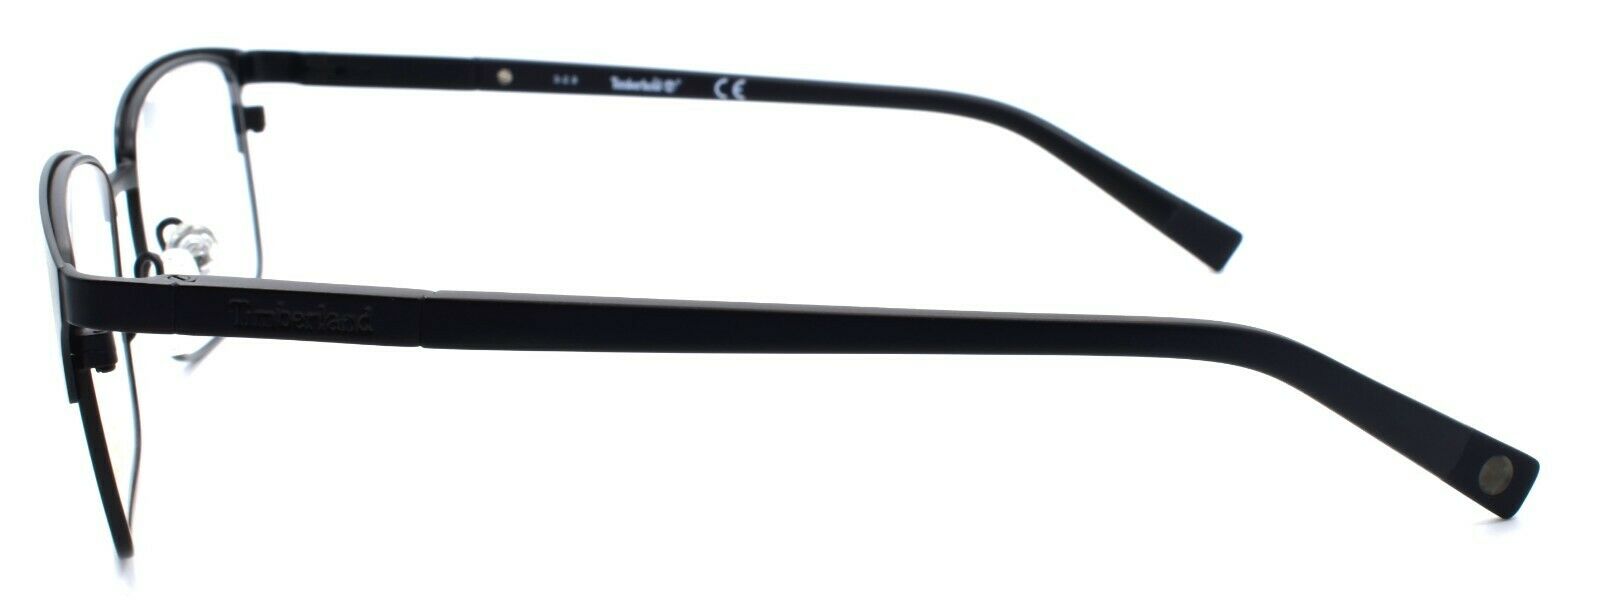 3-TIMBERLAND TB1604 002 Men's Eyeglasses Frames 53-17-140 Matte Black-664689963416-IKSpecs